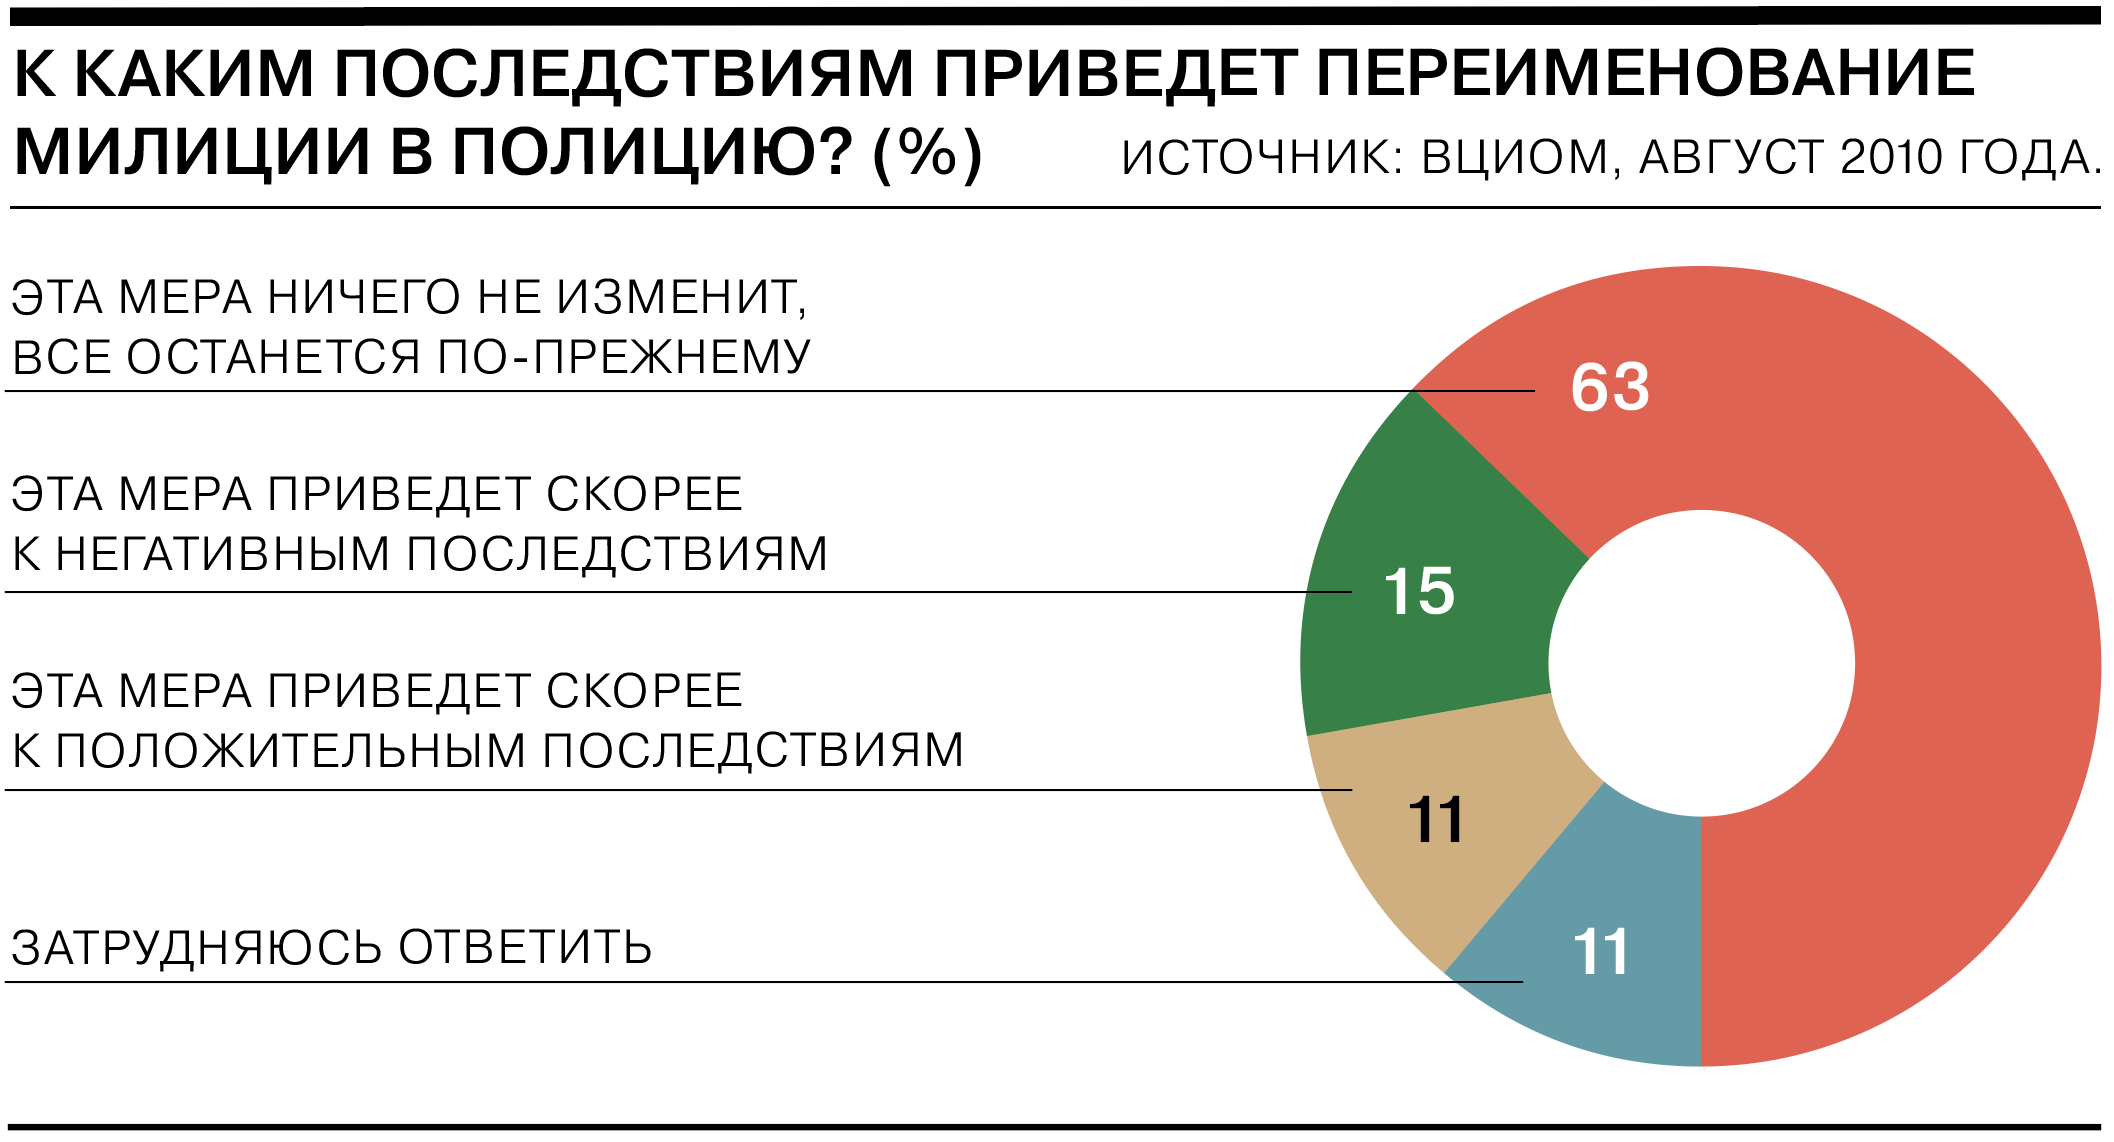 https://im.kommersant.ru/ISSUES.PHOTO/CORP/2021/02/05/1%D0%BF%D0%BE%D1%81%D0%BB%D0%B5%D0%B4%D1%81%D1%82%D0%B2%D0%B8%D1%8F.png